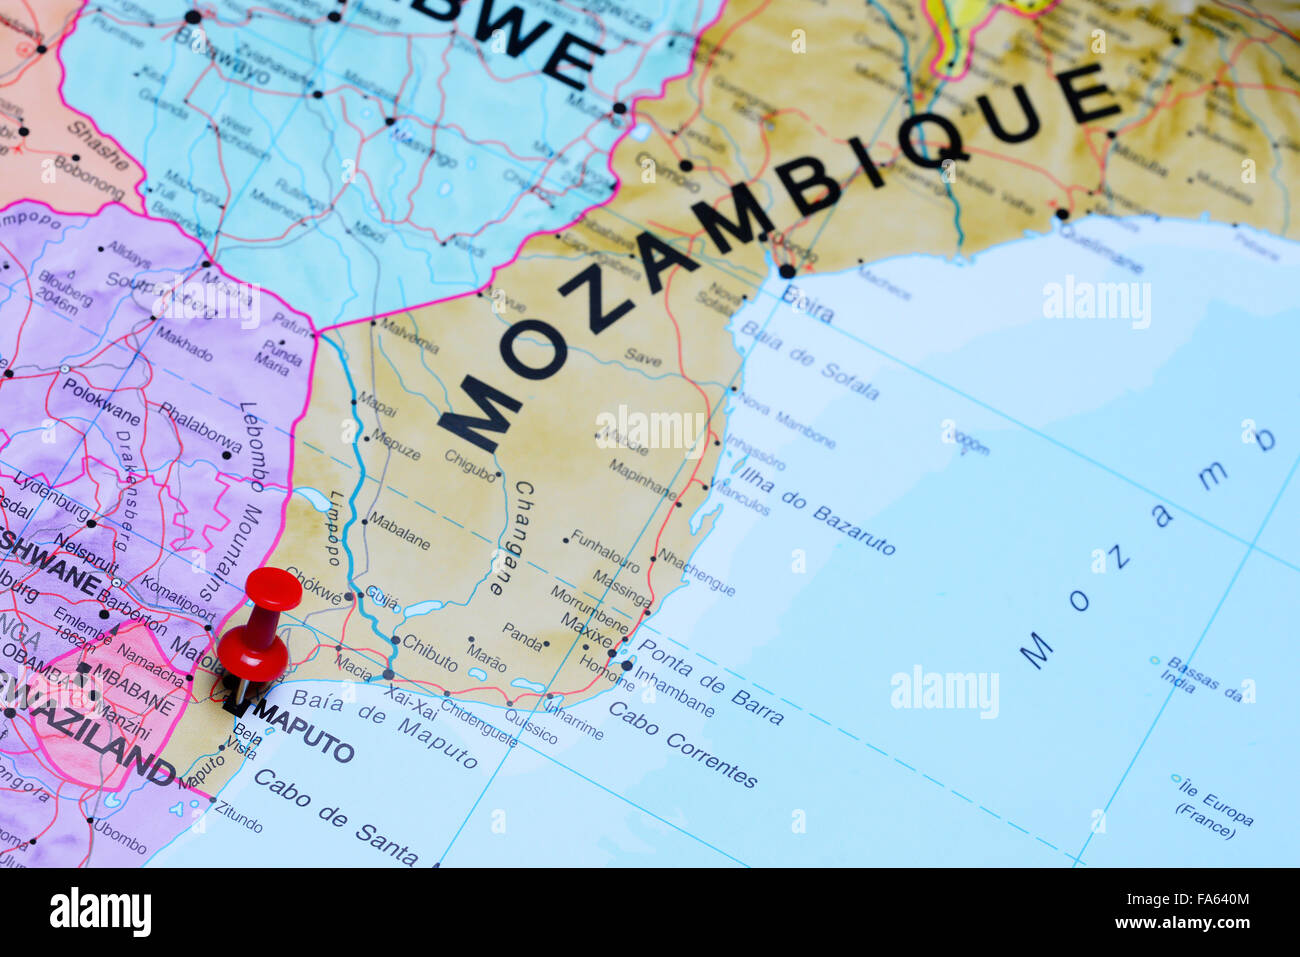 Maputo imperniata su una mappa di Africa Foto Stock